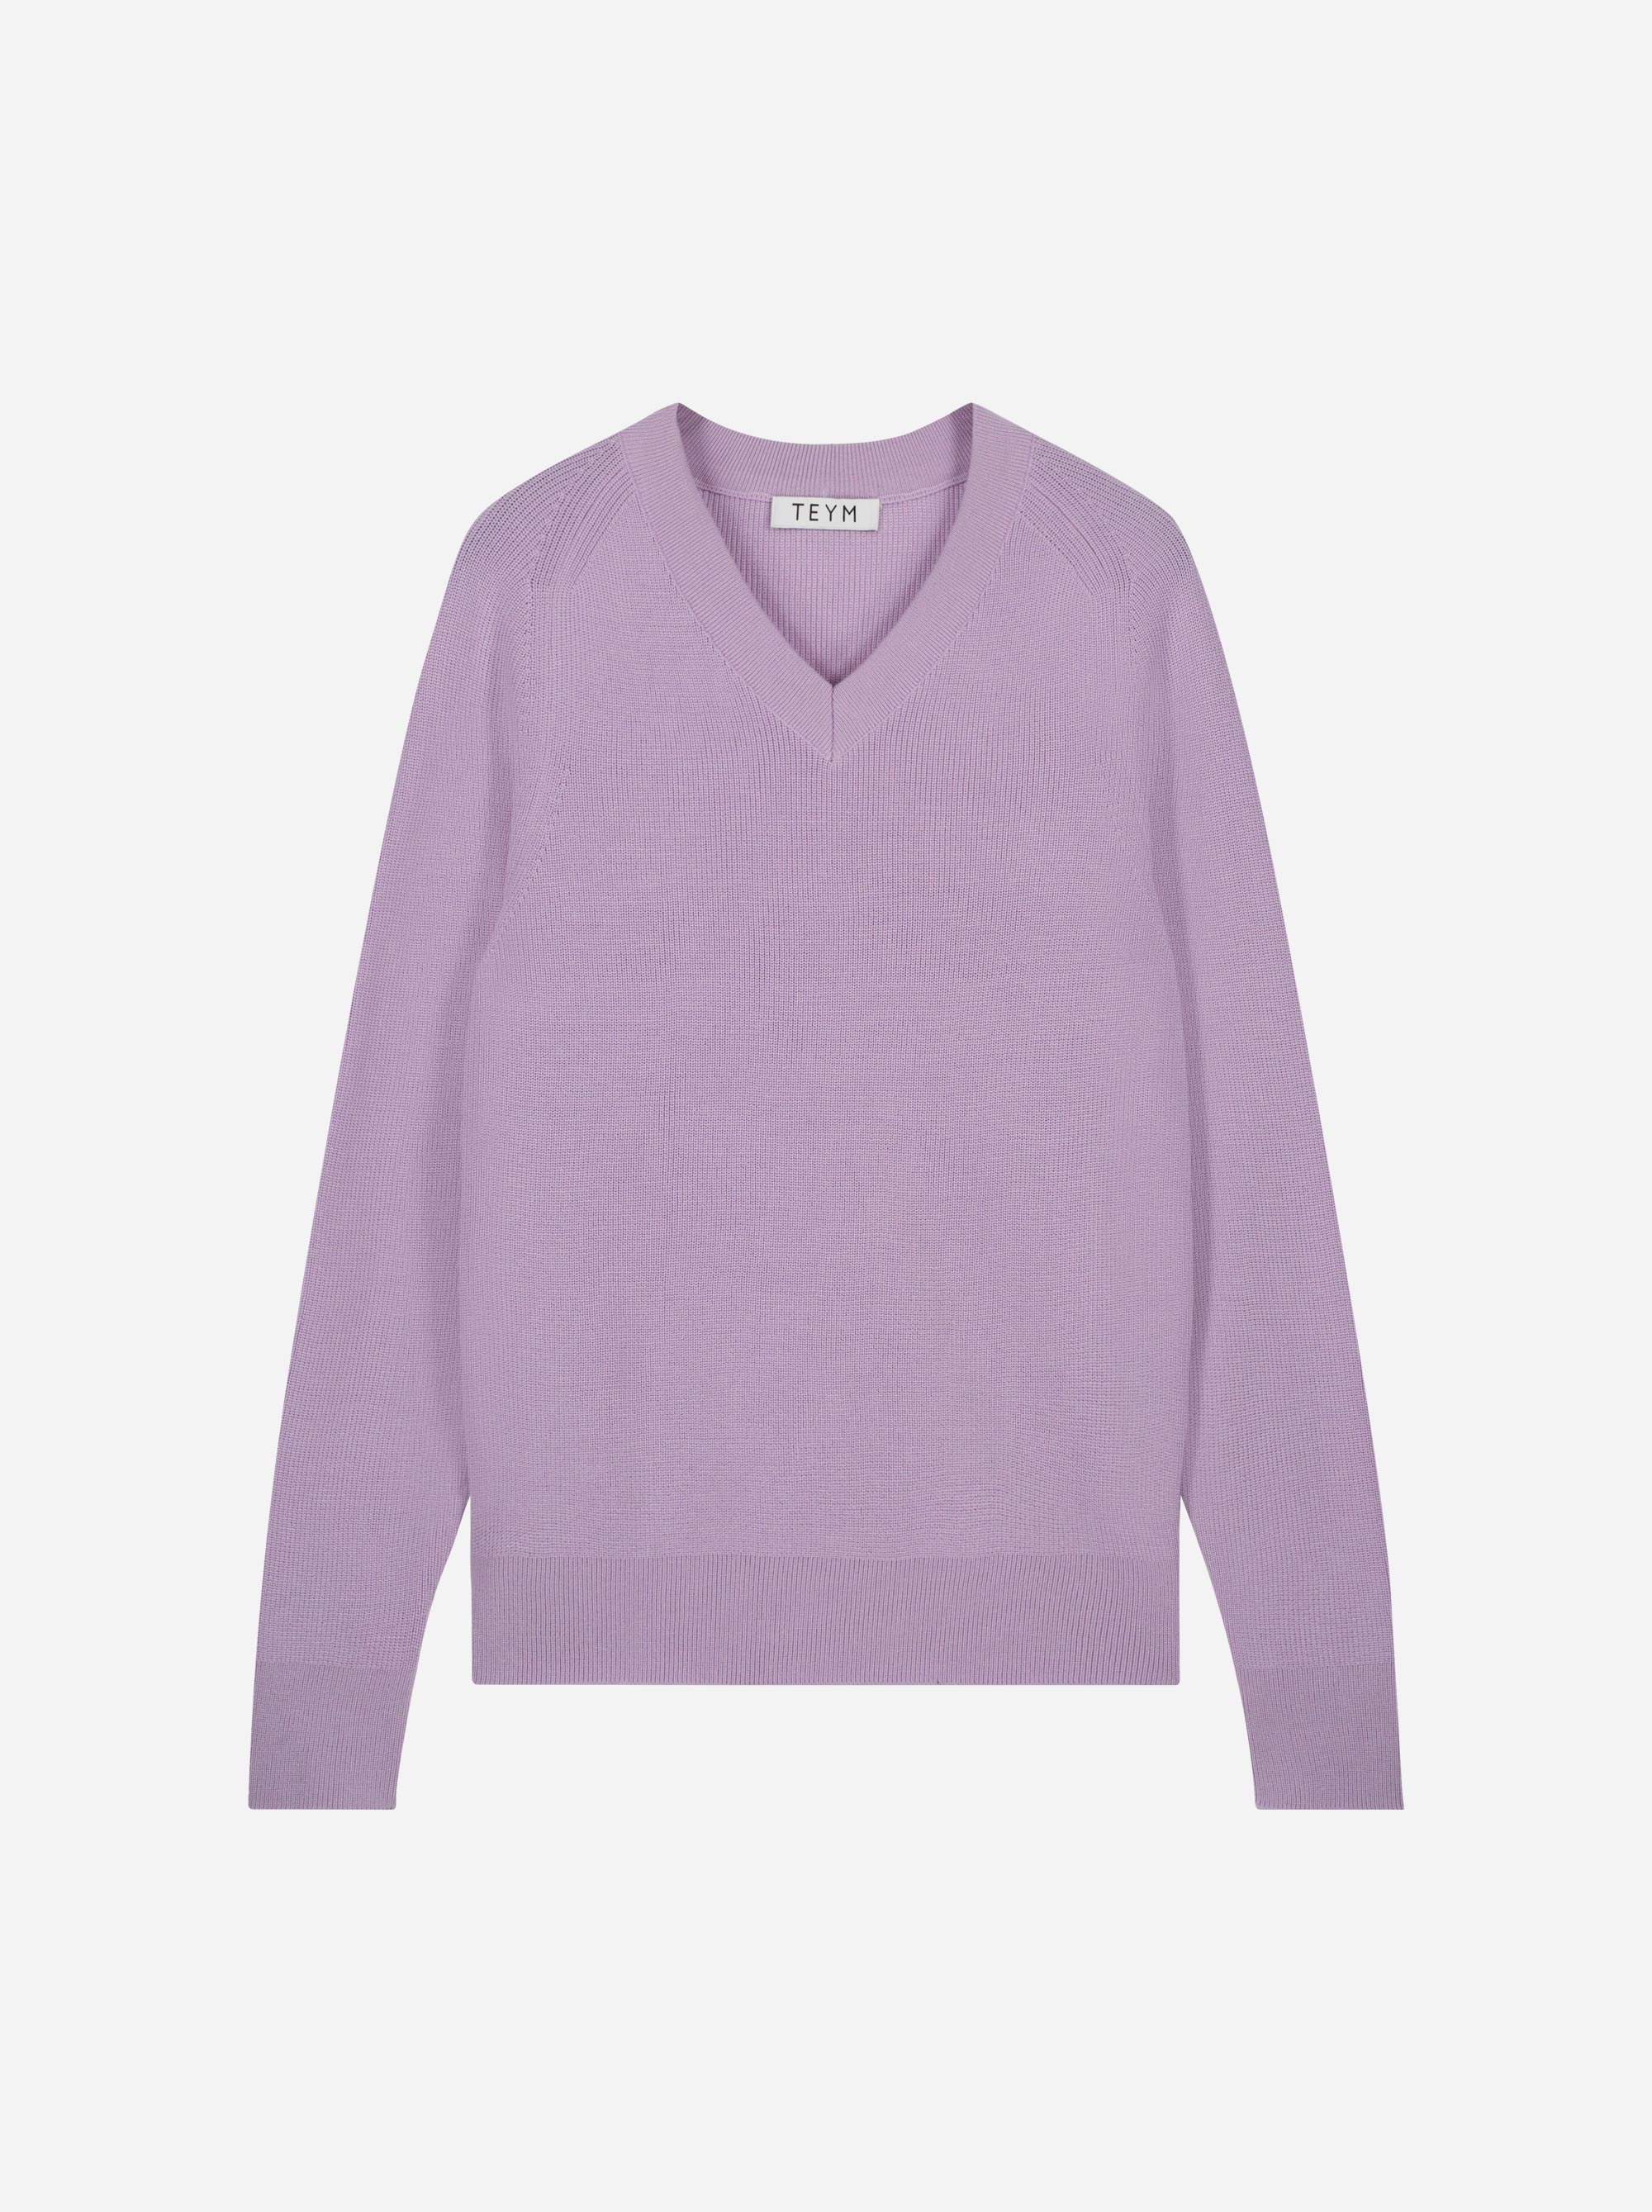 Teym_Merino-Sweater-V-Neck_Lila_front_1